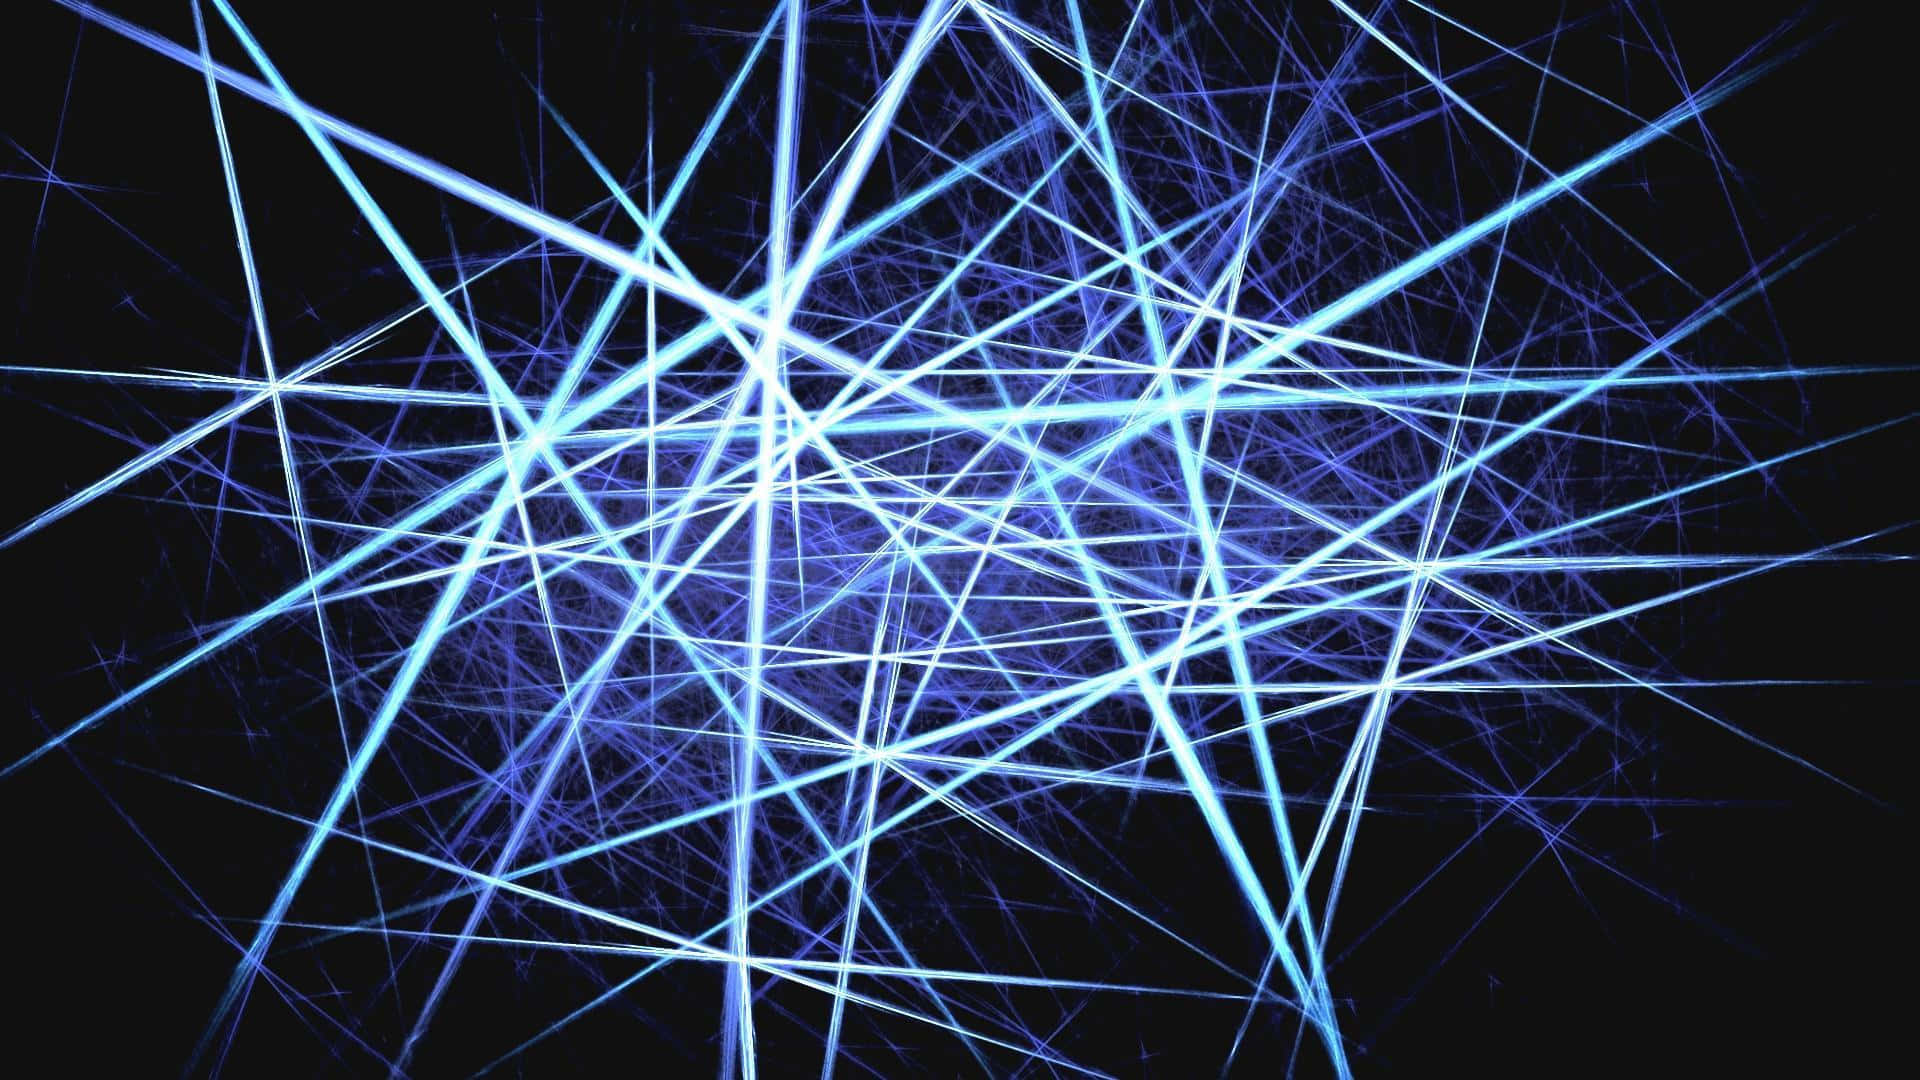 Abstract Blue Laser Light Network.jpg Wallpaper